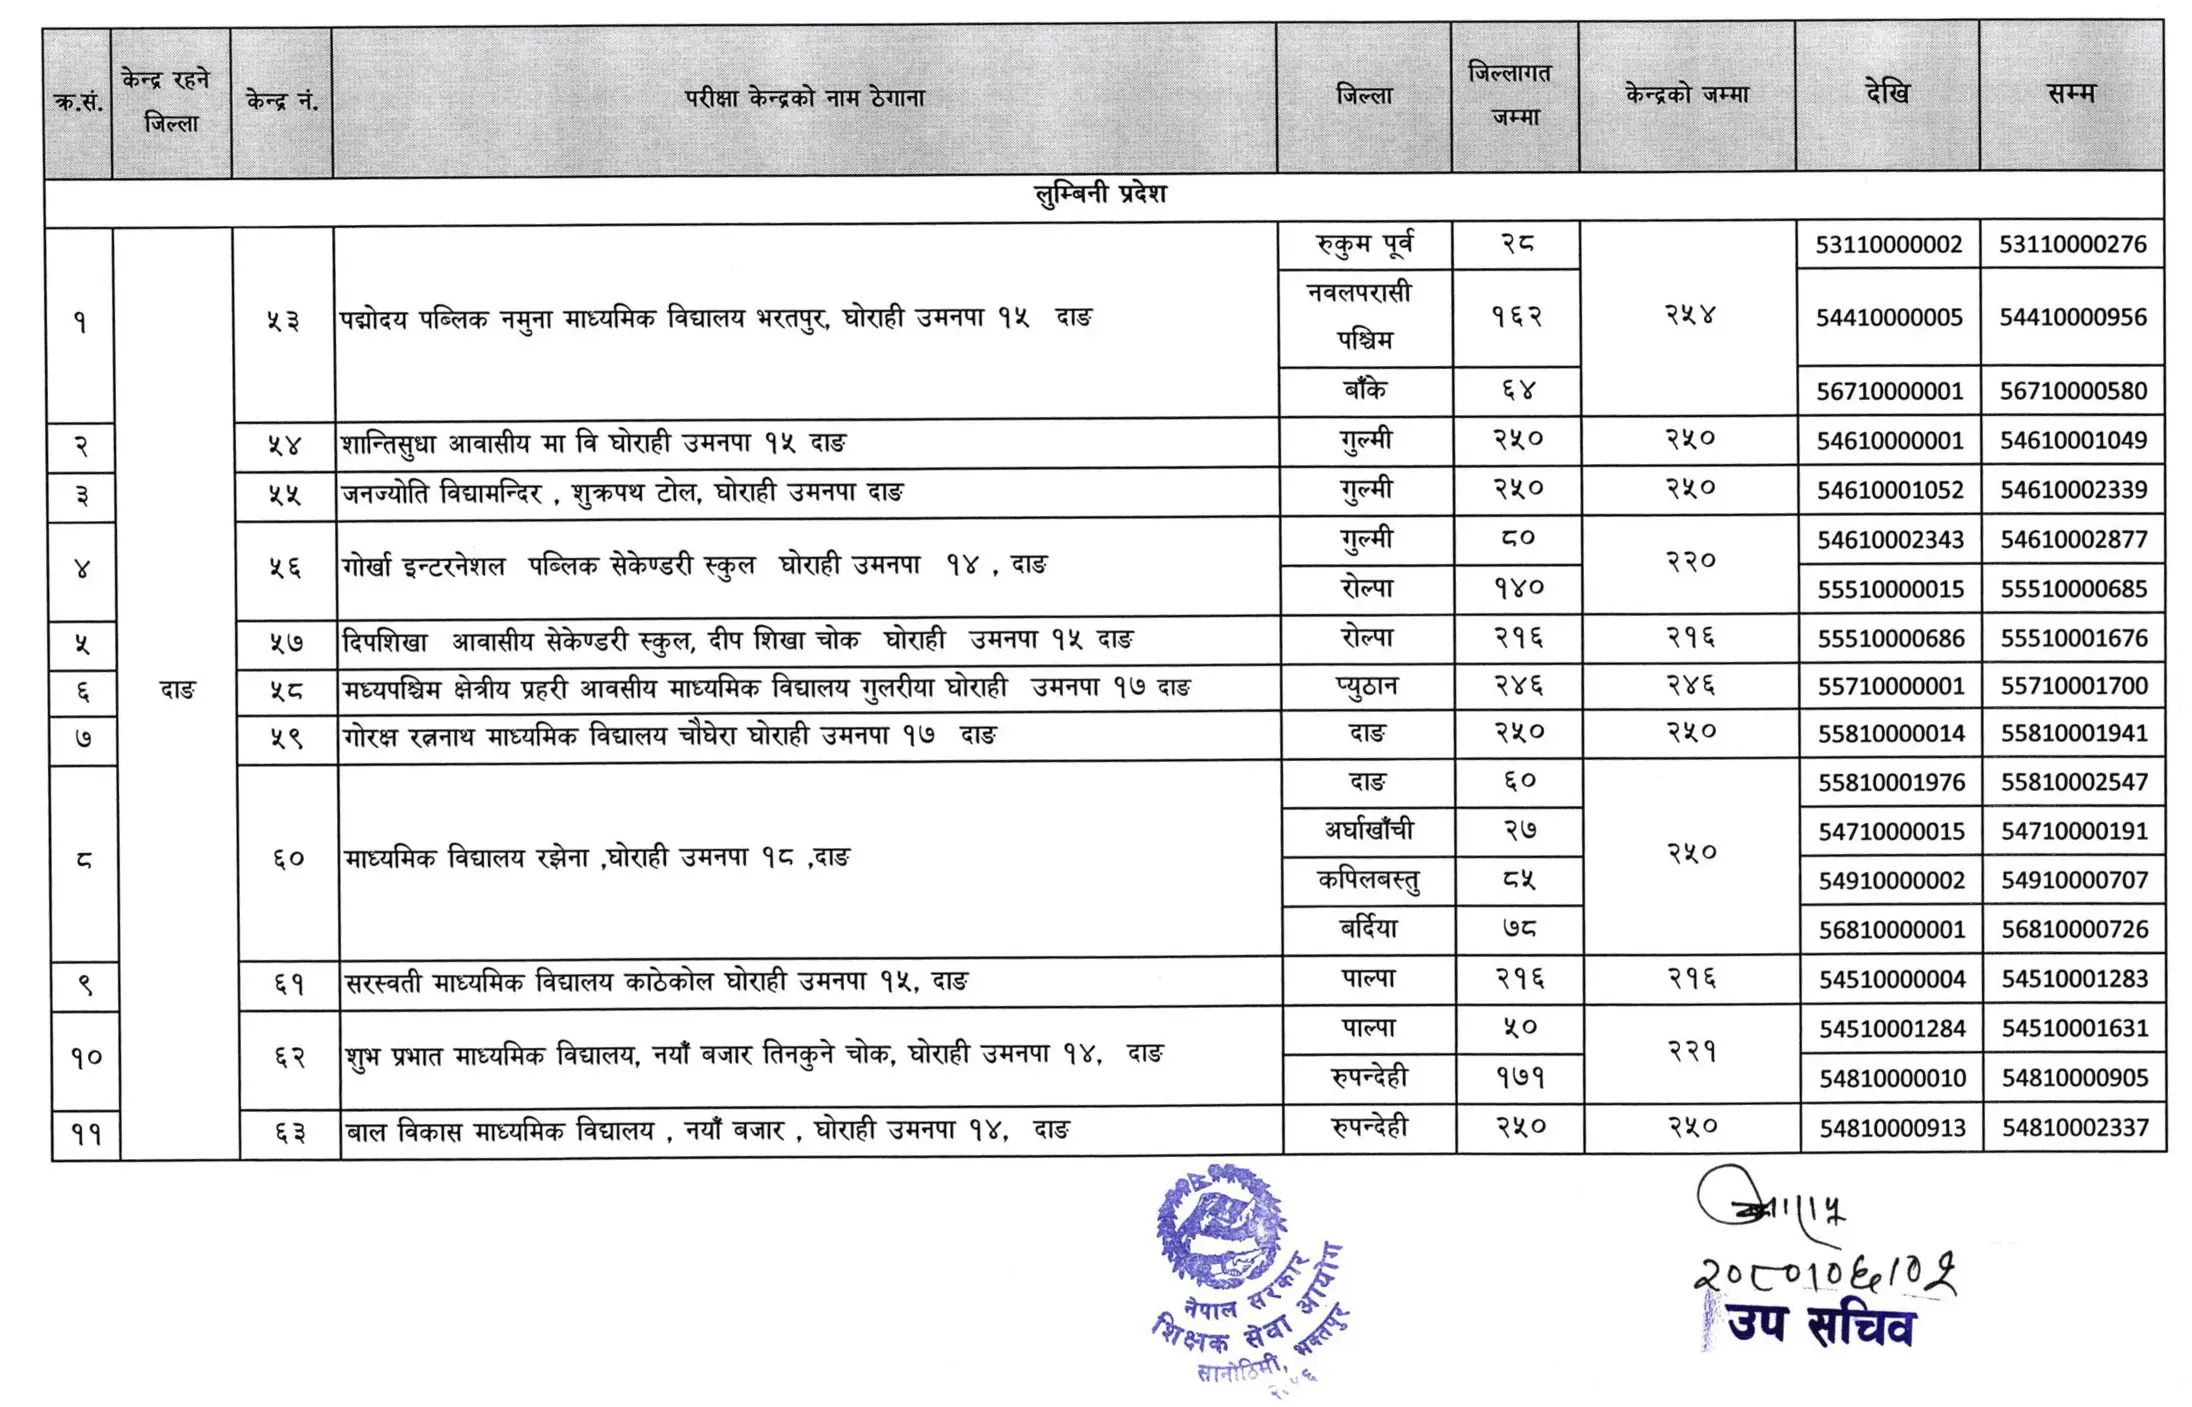 Lumbani Pradesh Primary Level Written Examination Center 2080.webp